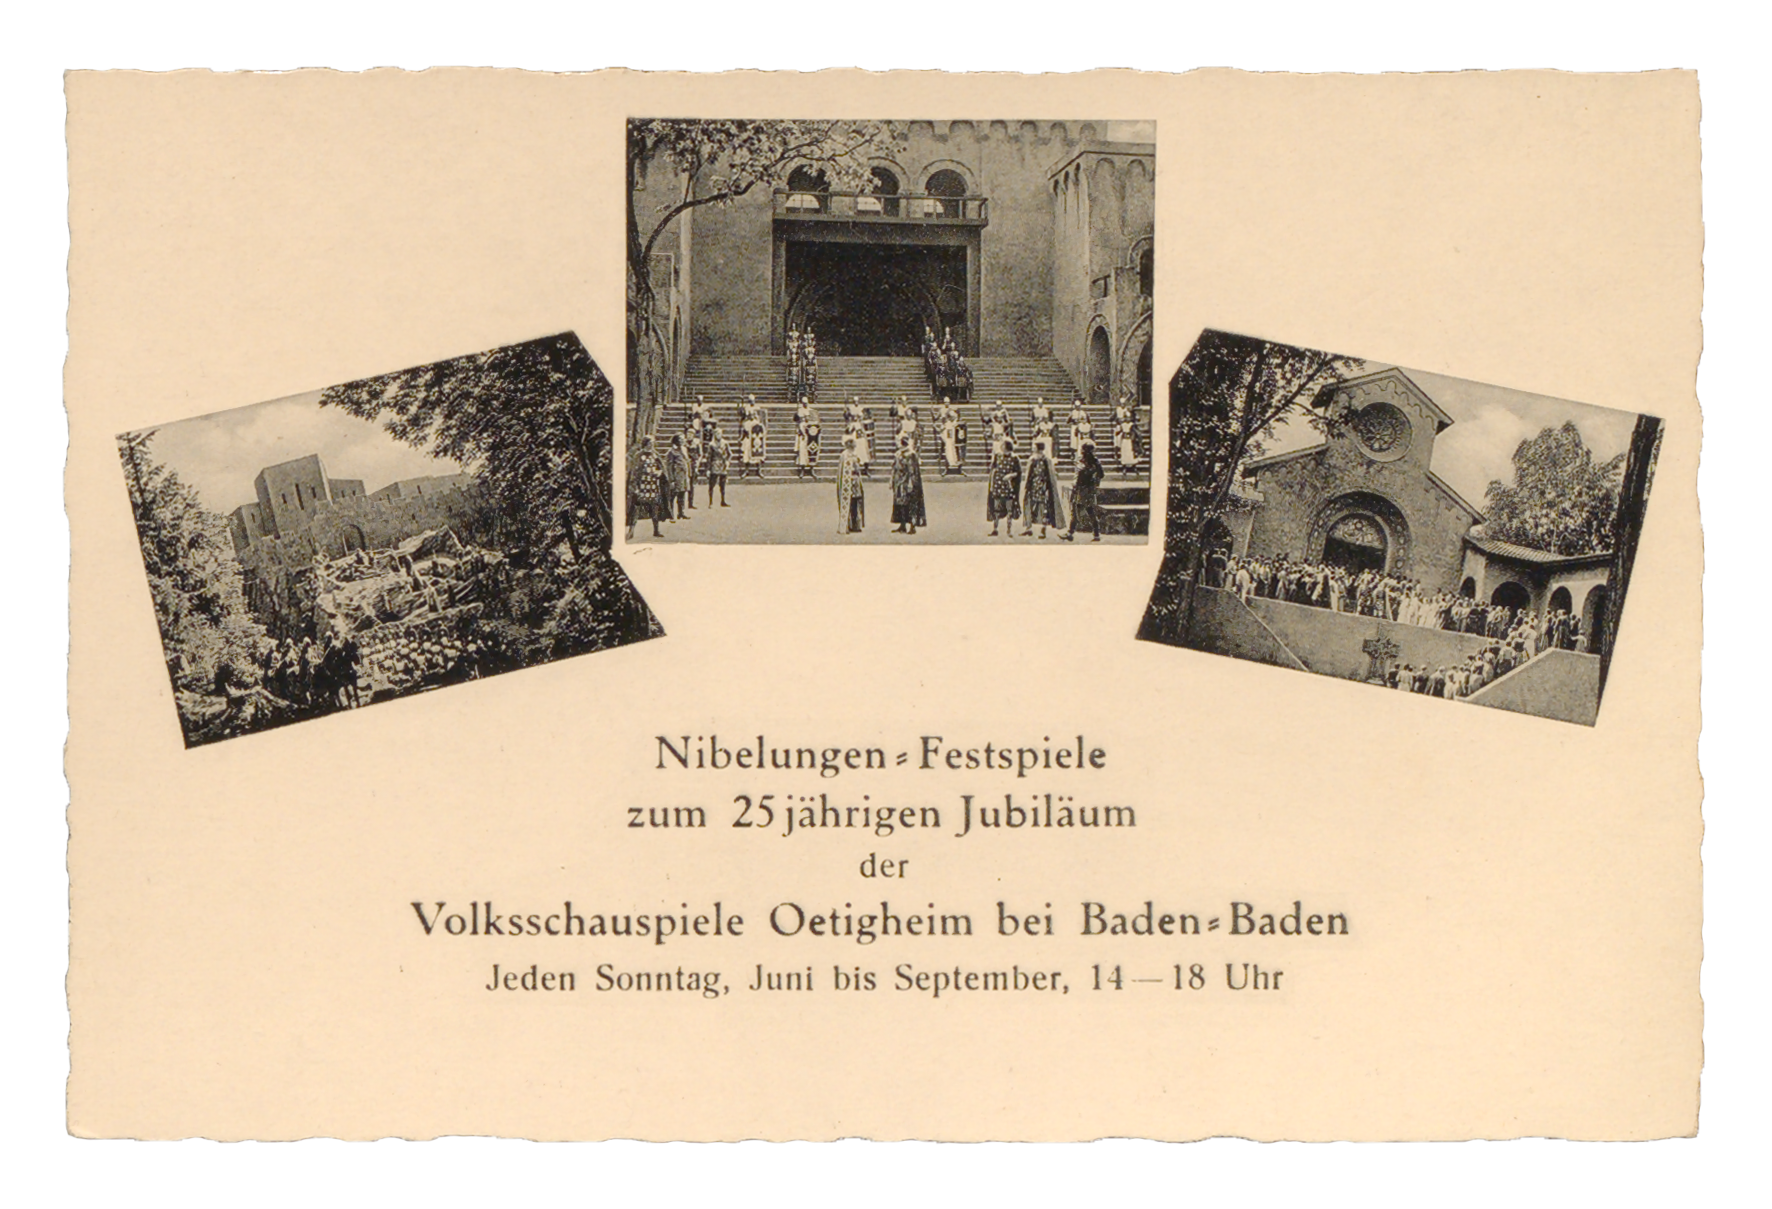 6541155_Nibelungen-Festspiele zum 25jährigen Jubiläum der Volksschauspiele Ötigheim bei Baden-Baden .png